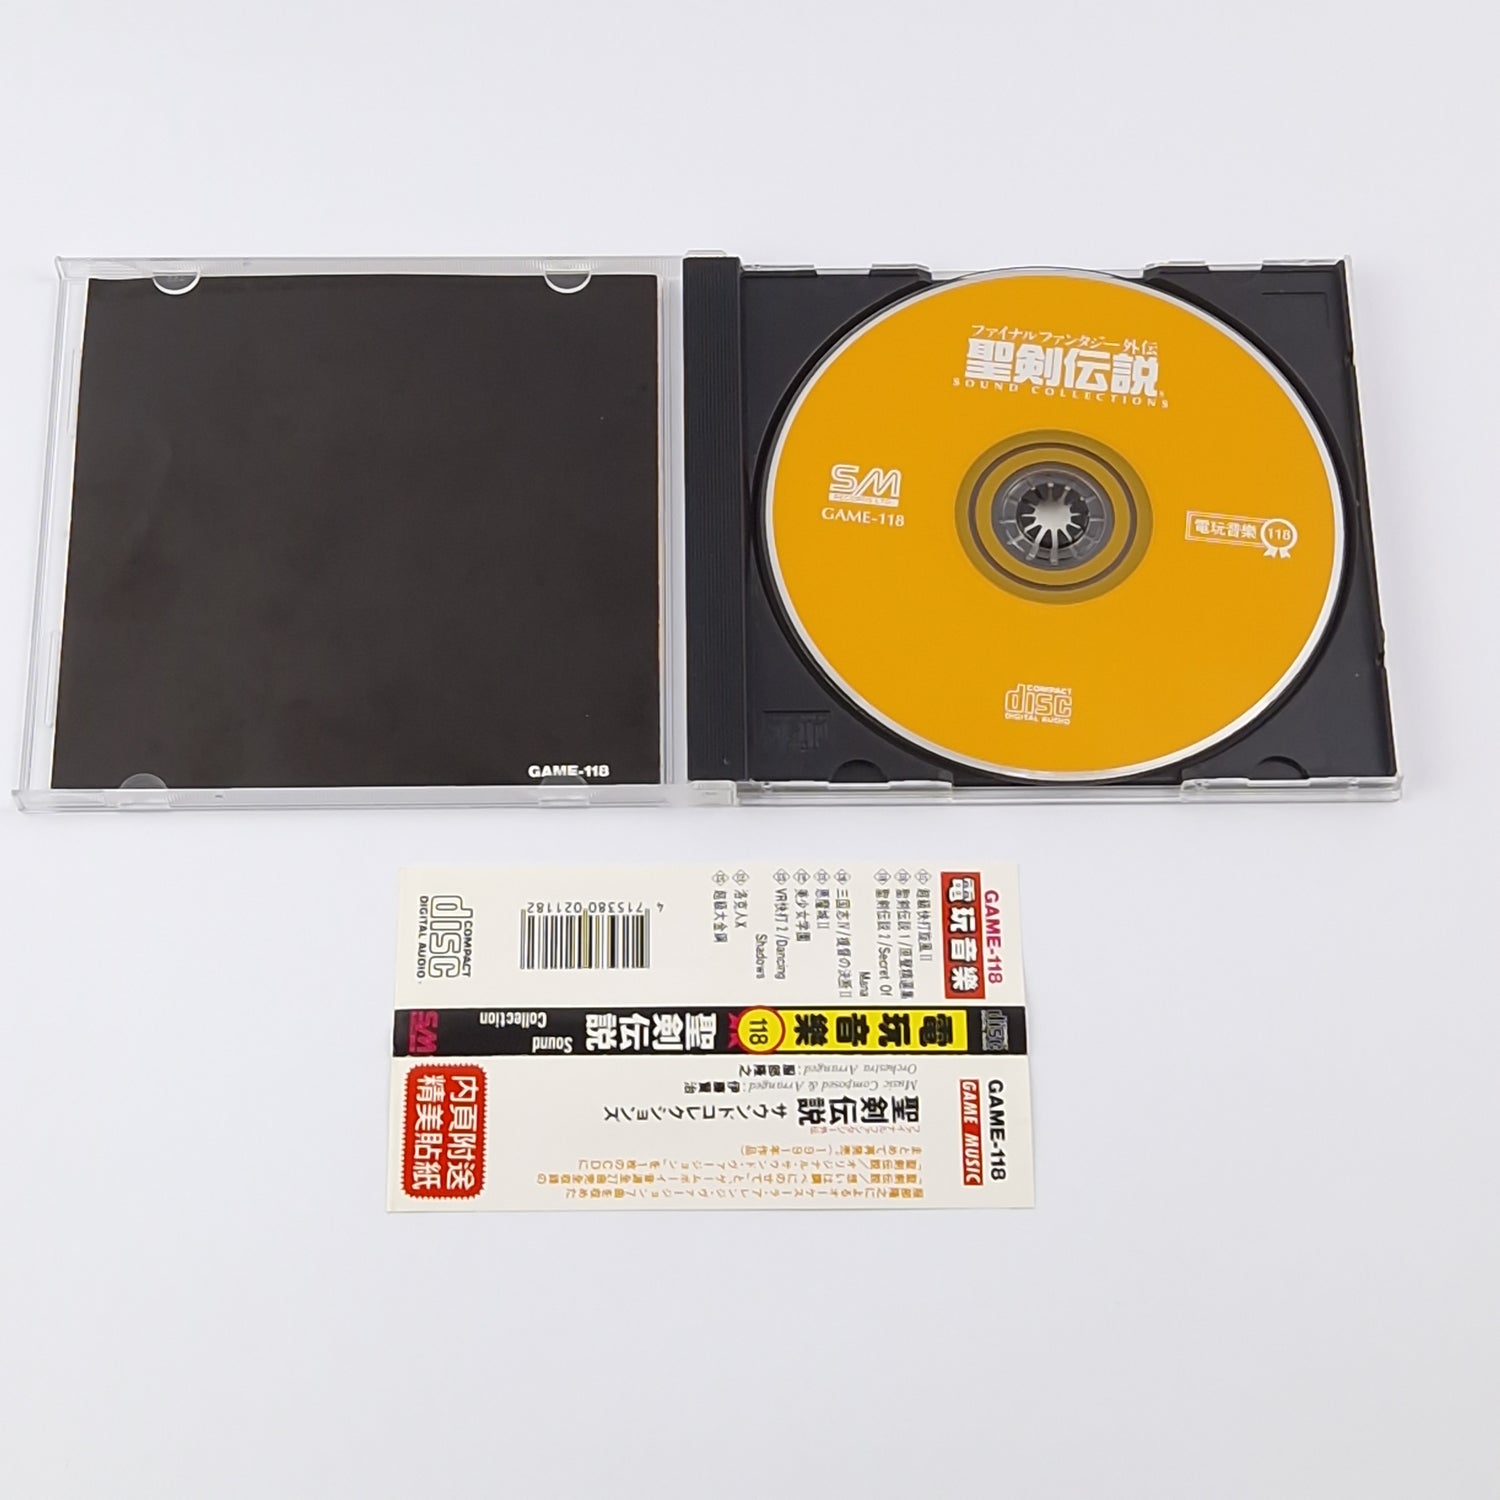 Original Video Game Soundtrack: Secret of Mana Sound Collections - Music CD